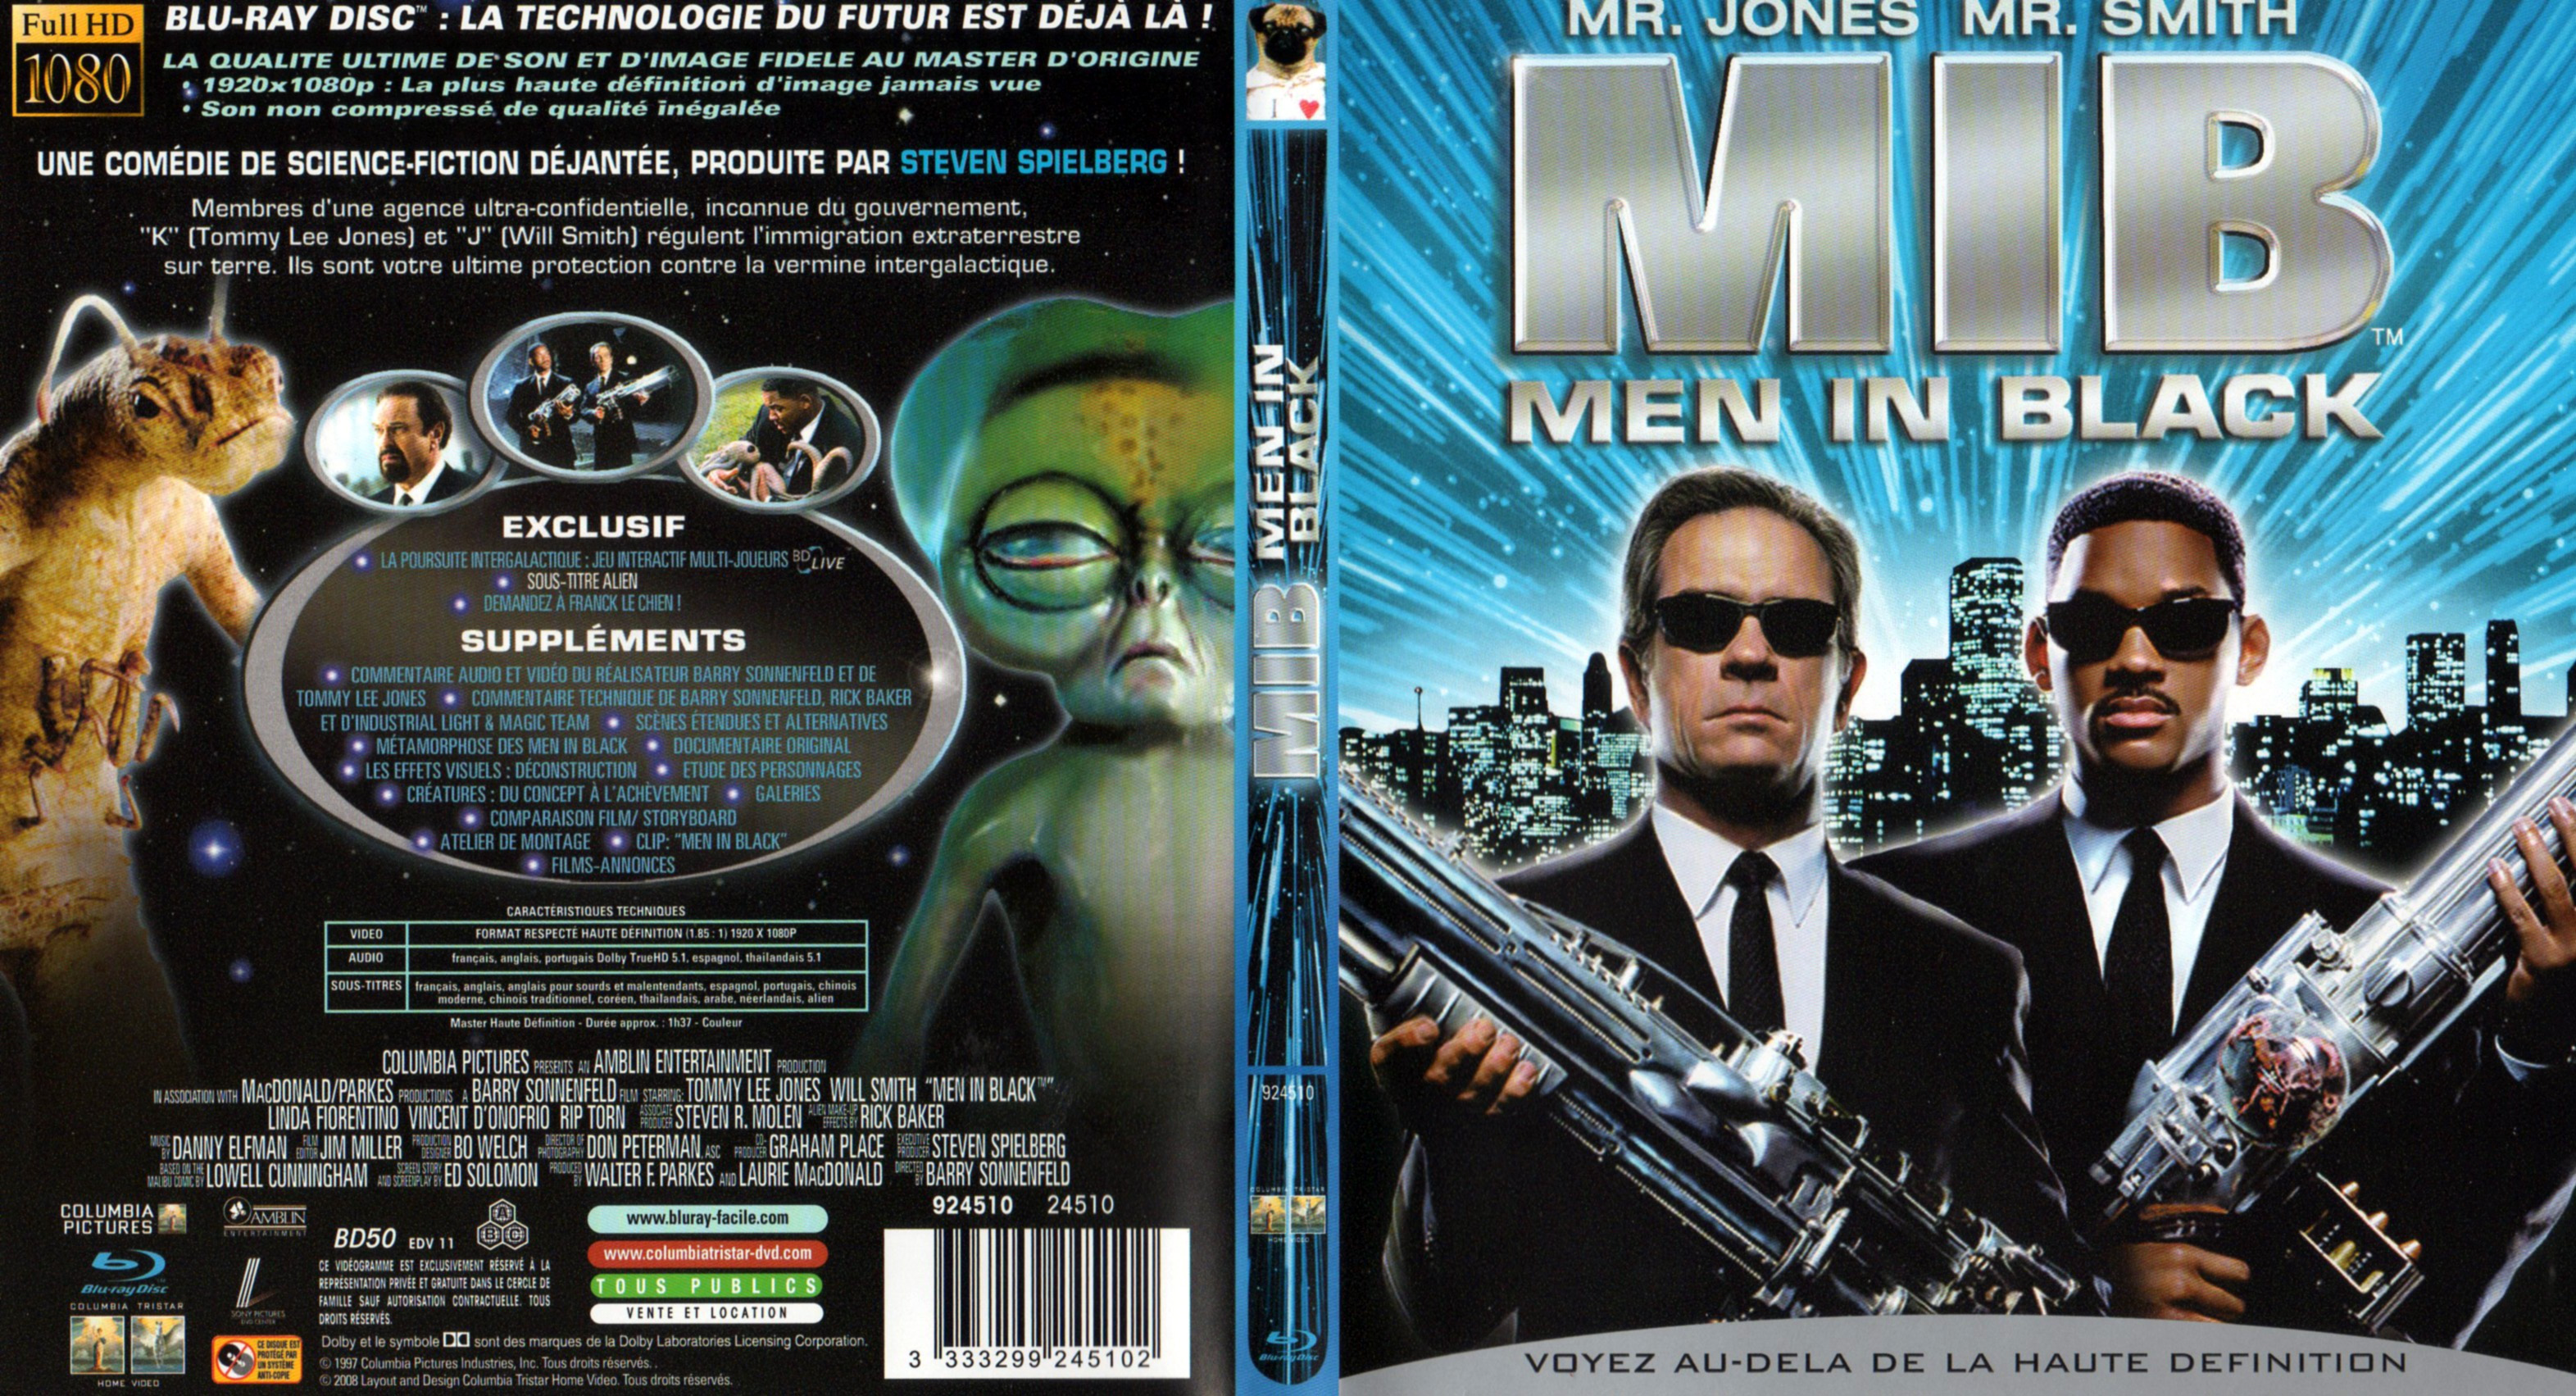 Jaquette DVD Men in black (BLU-RAY)